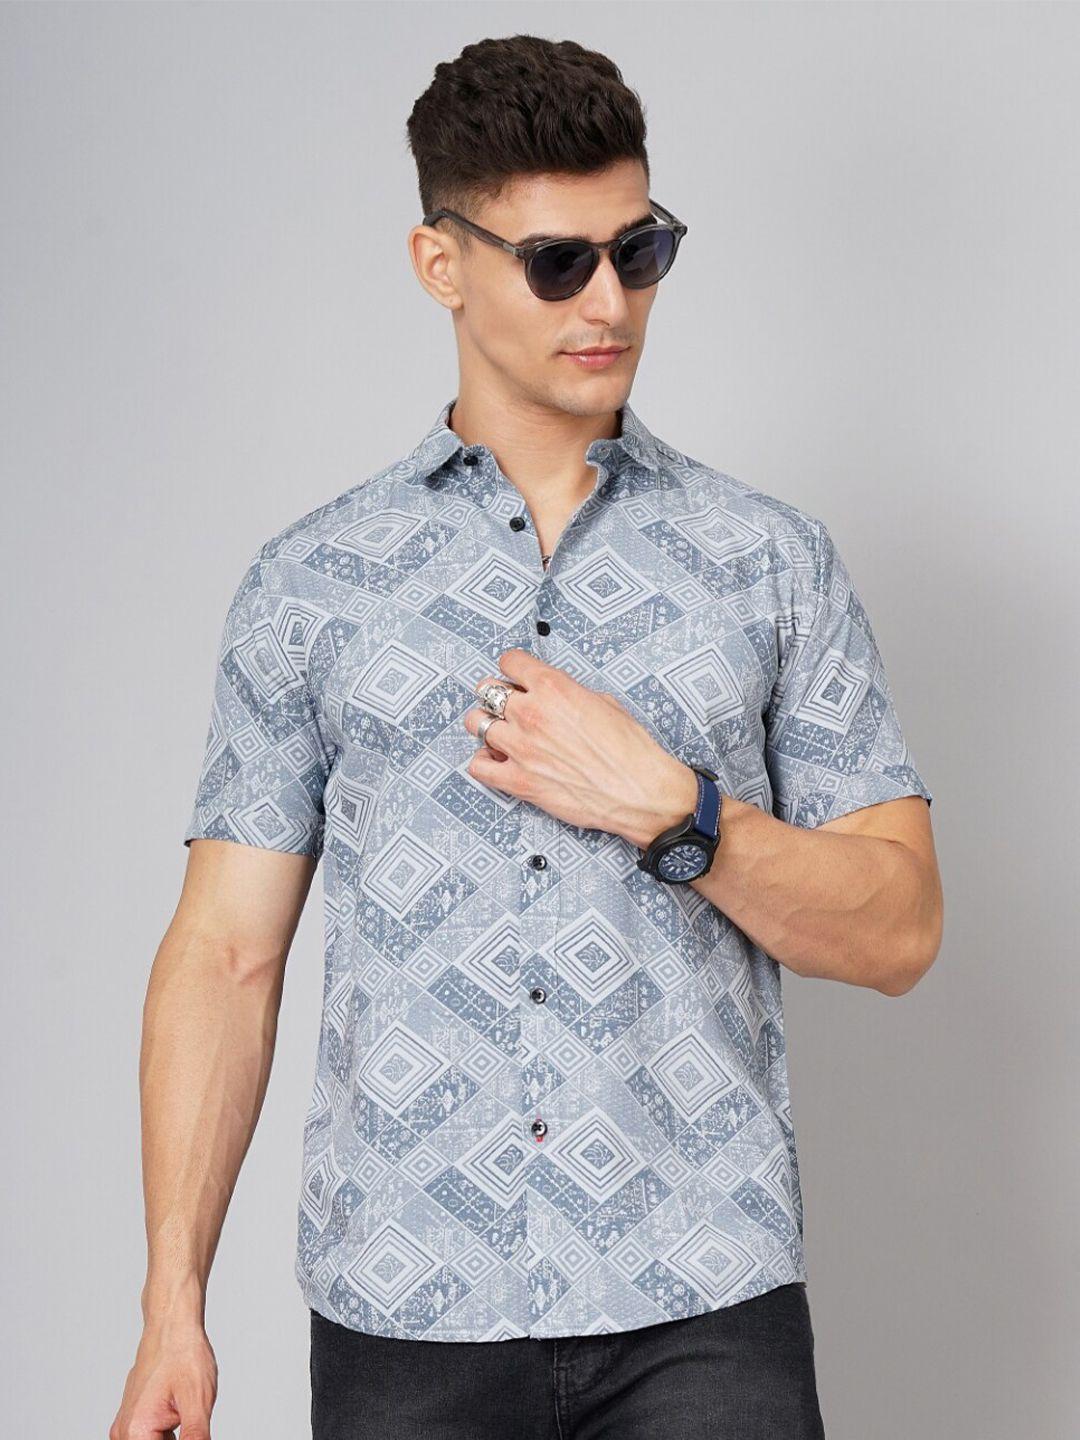 paul street standard geometric printed opaque casual shirt